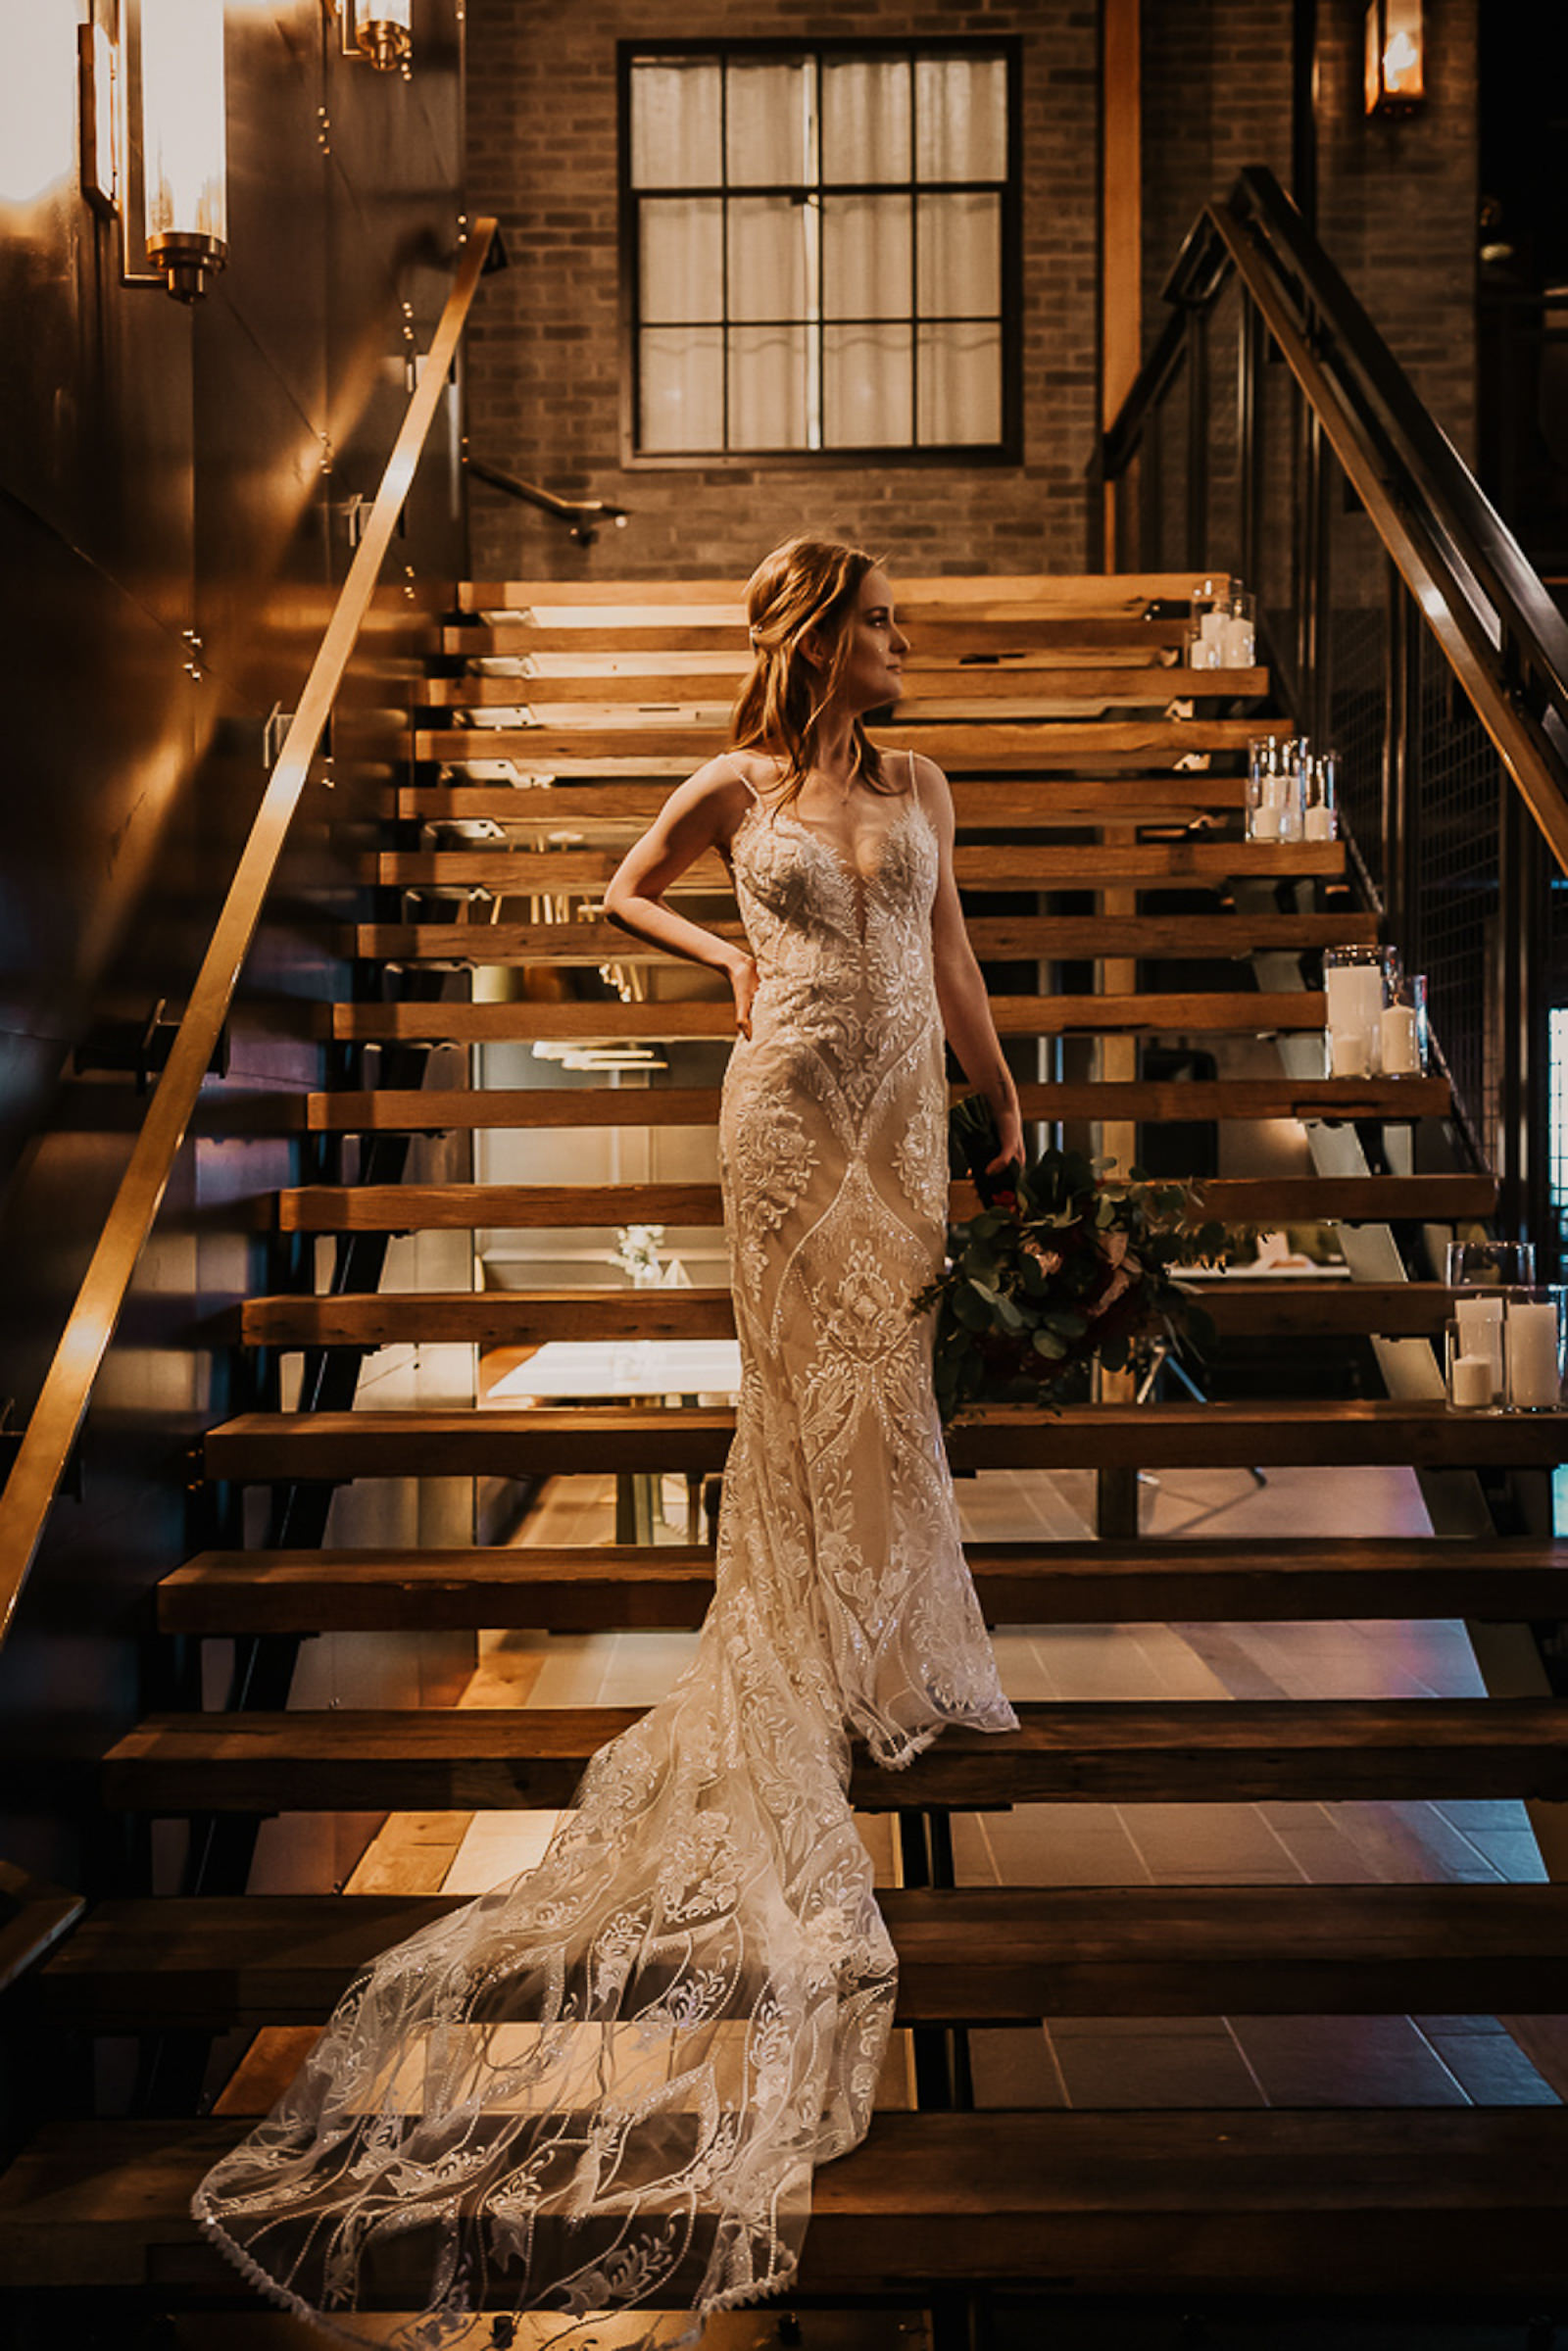 Bride in Vintage Inspired Lace Wedding Dress | Off White Fitted Detail Plunge Neckline | Chic Nostalgia | Downtown St. Pete Wedding Venue Urban Stillhouse